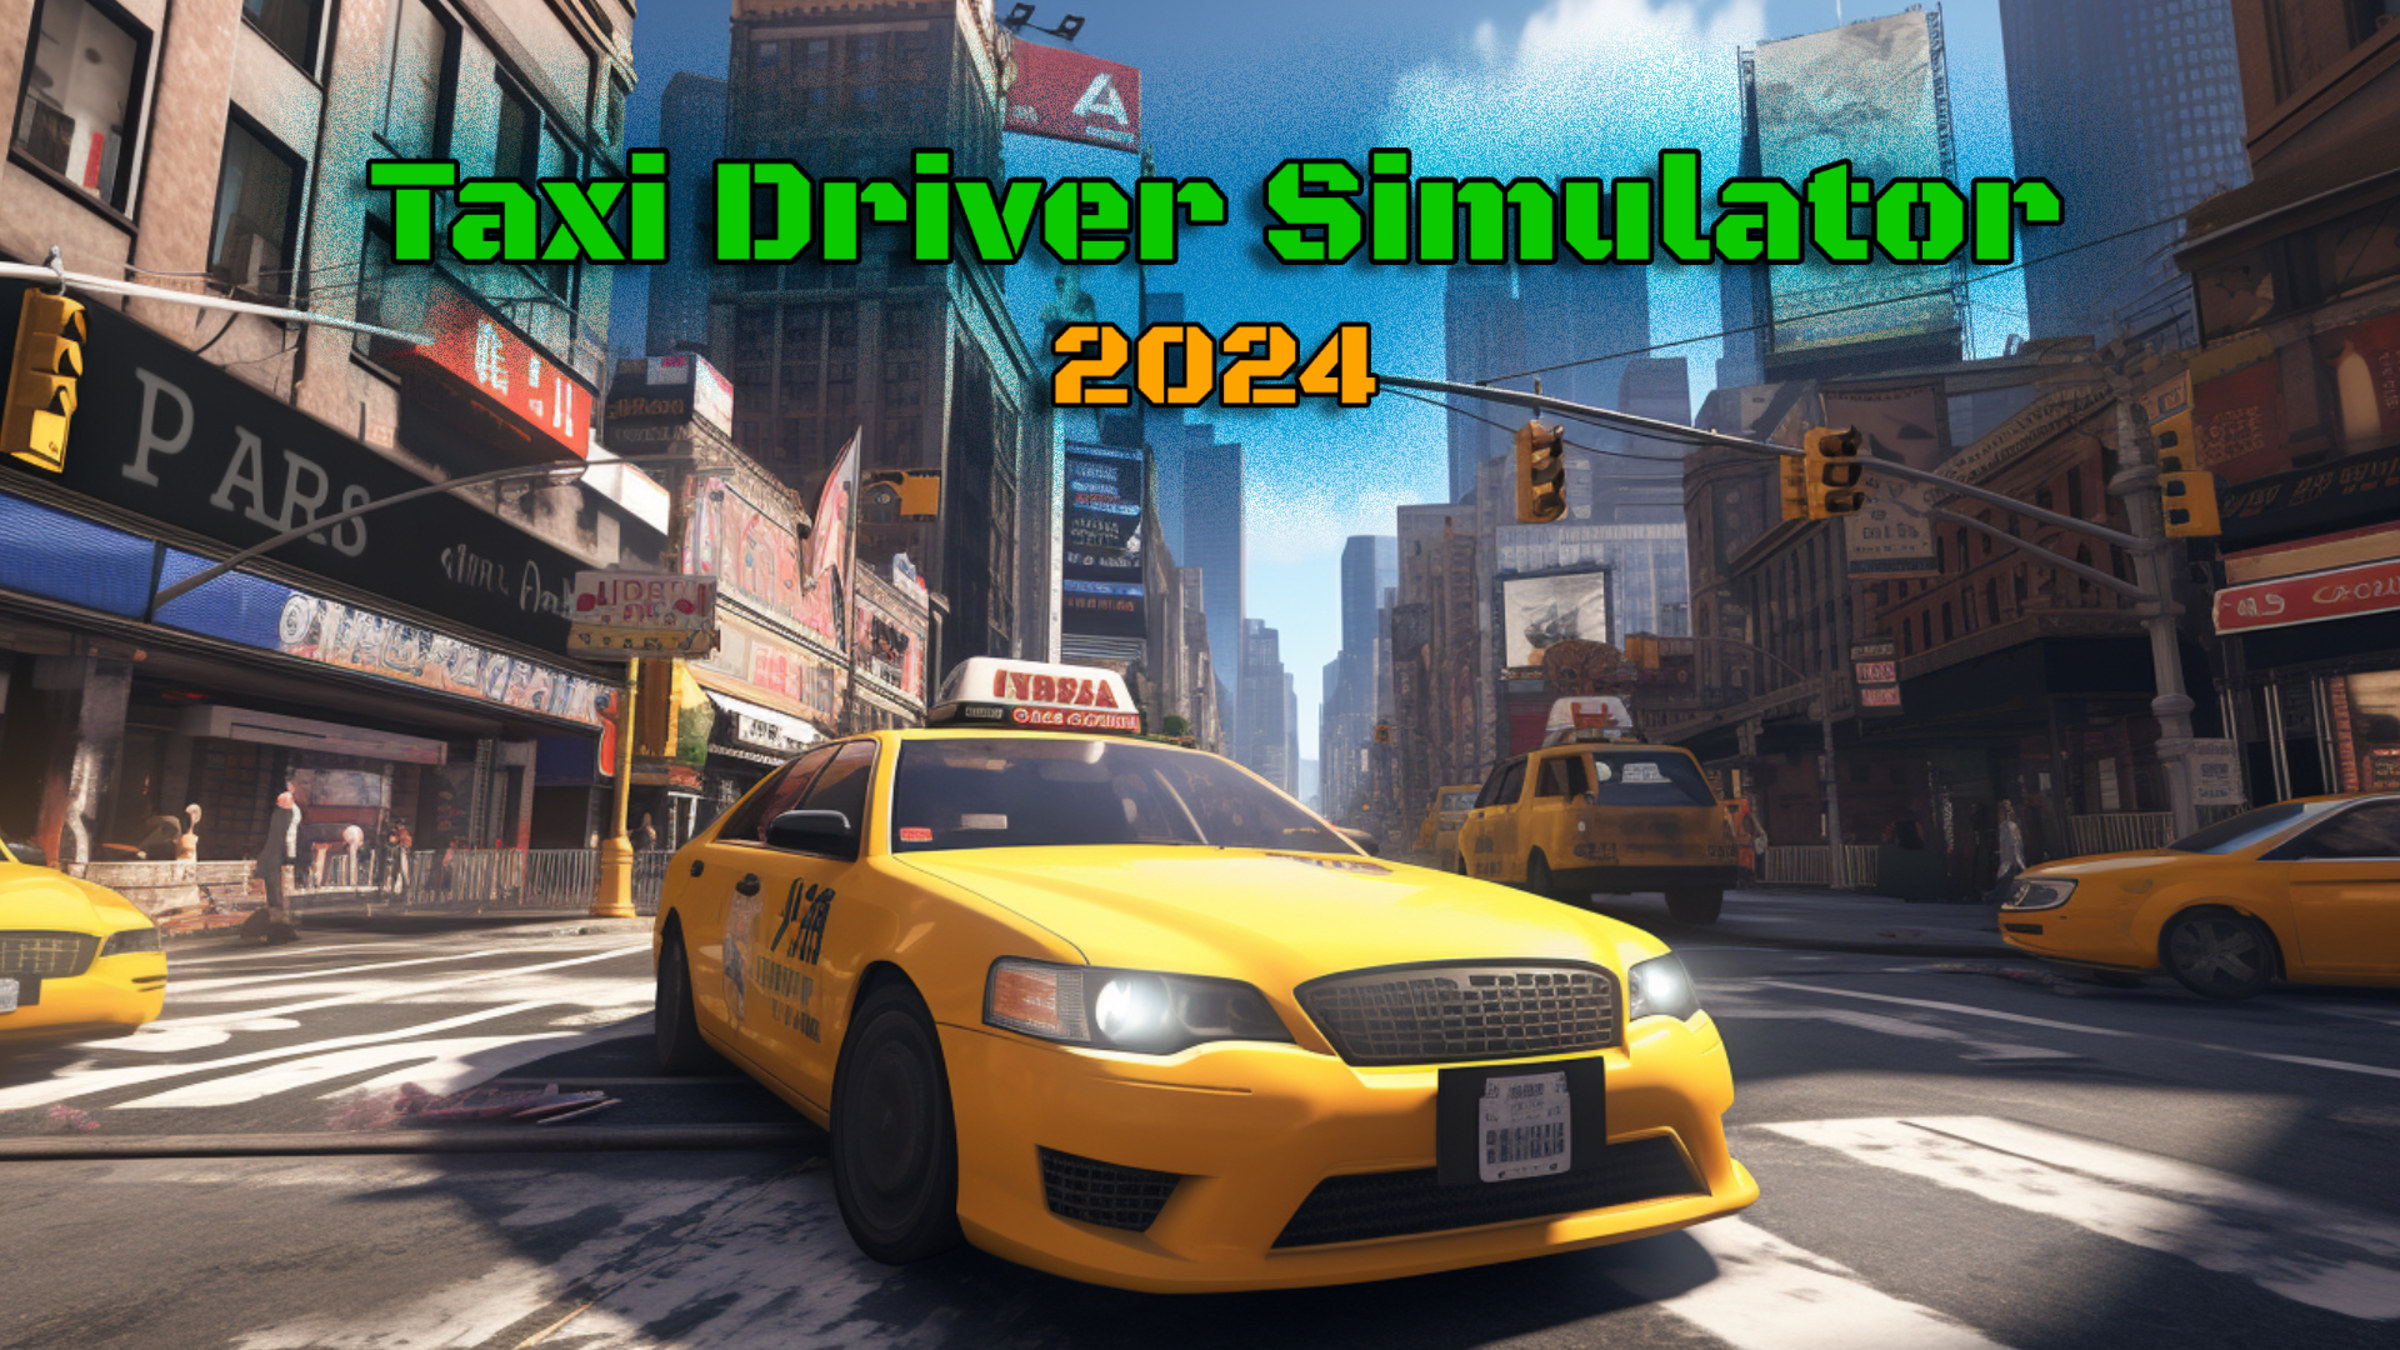 Taxi Driver Simulator 2024 pour Nintendo Switch - Site officiel Nintendo